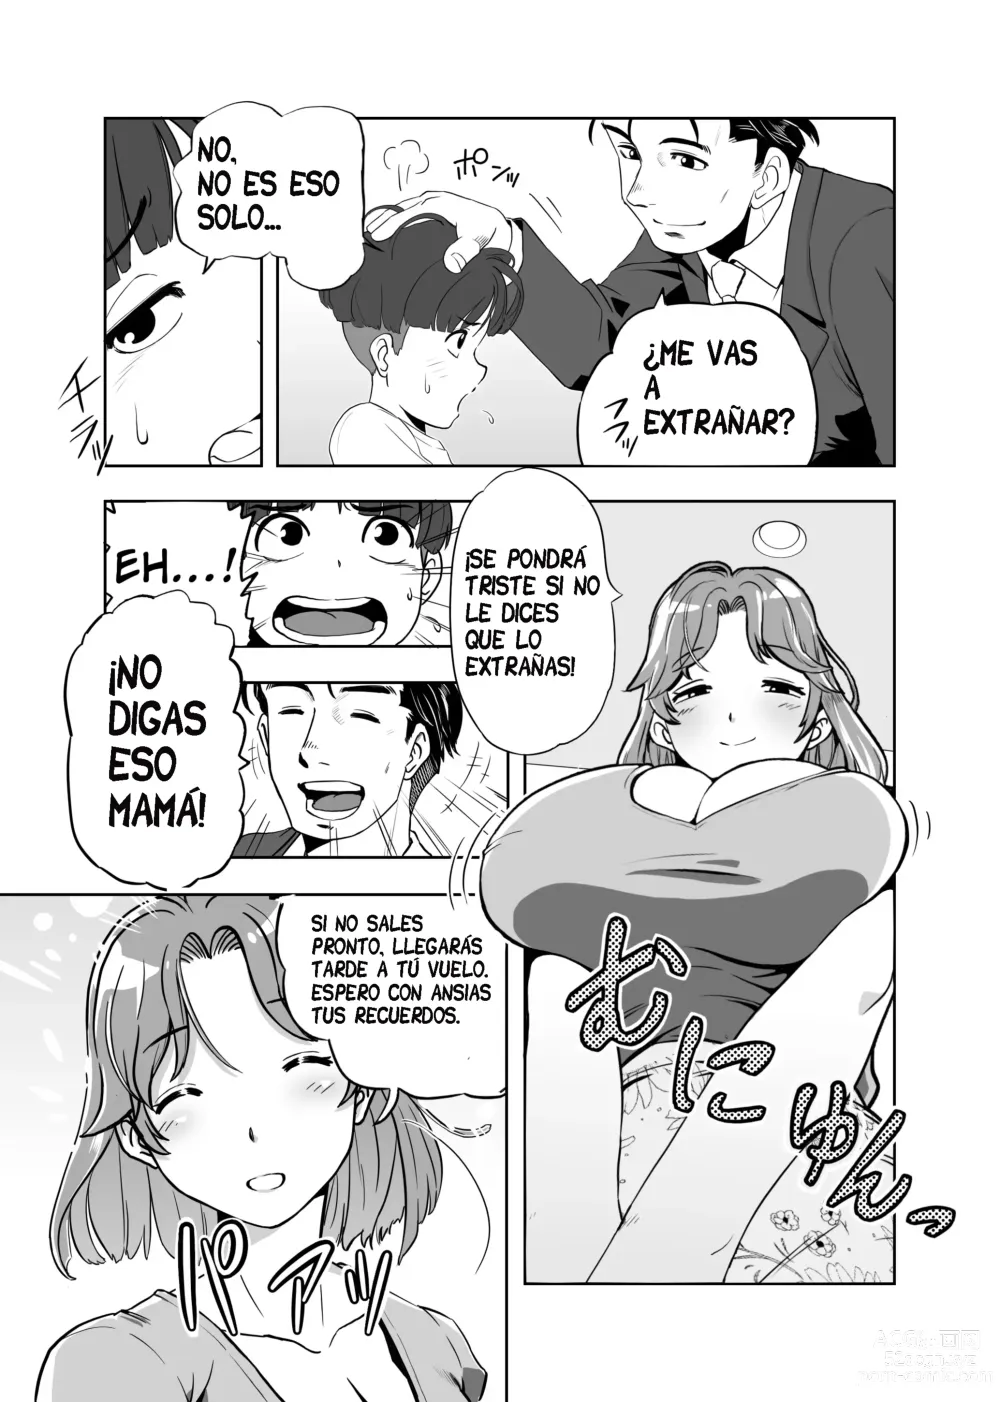 Page 3 of doujinshi Ese chico que odia ser mamá